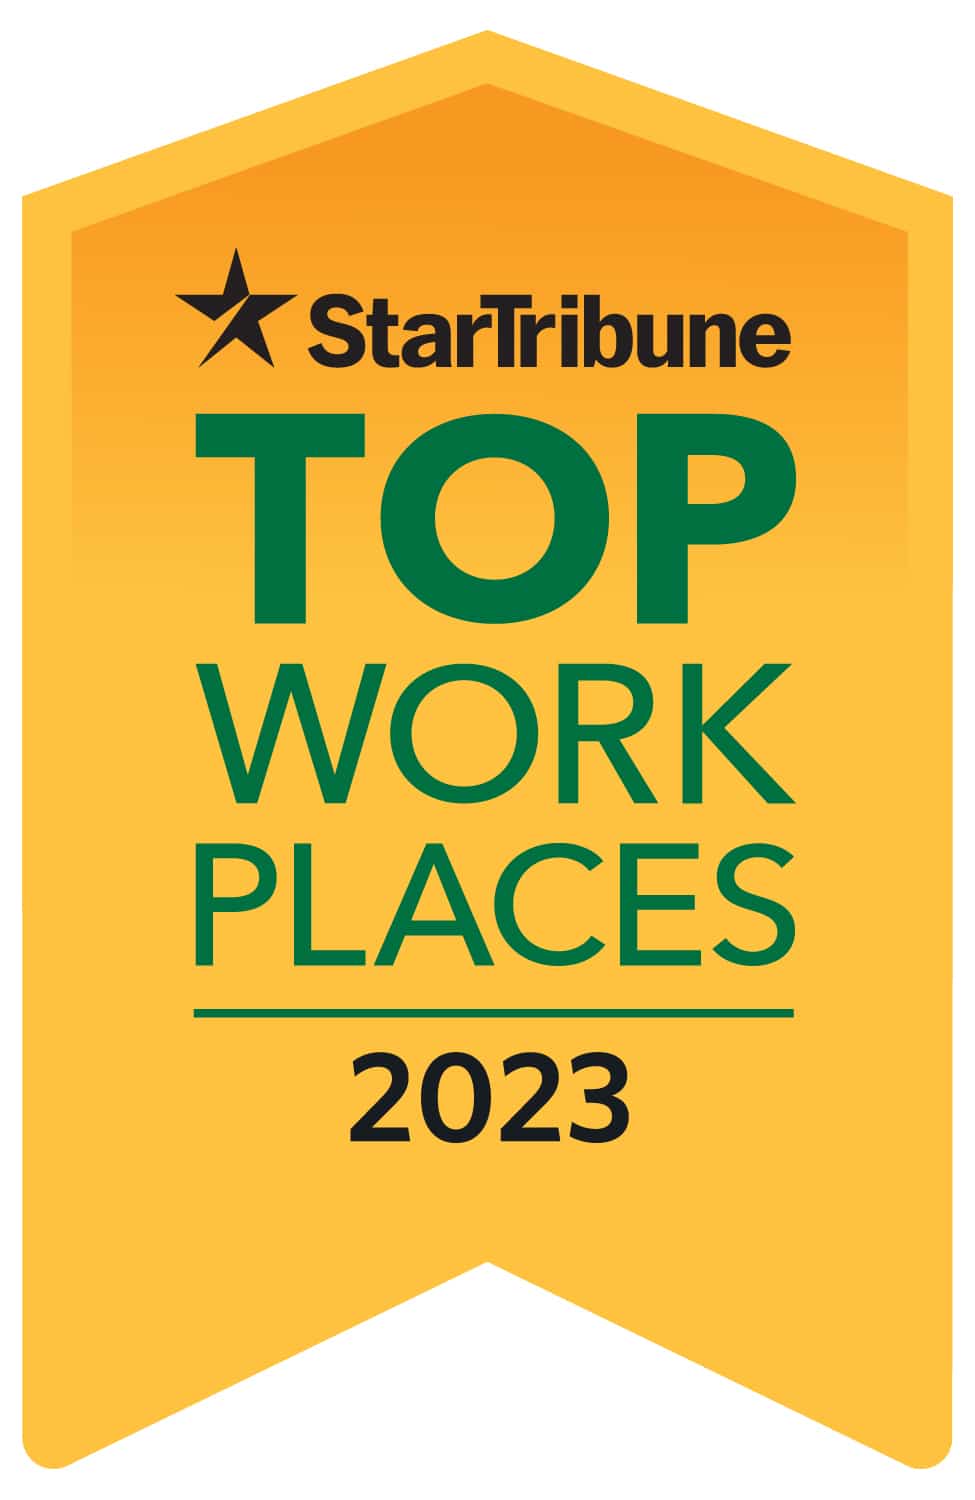 Star Tribune Top Workplaces 2022